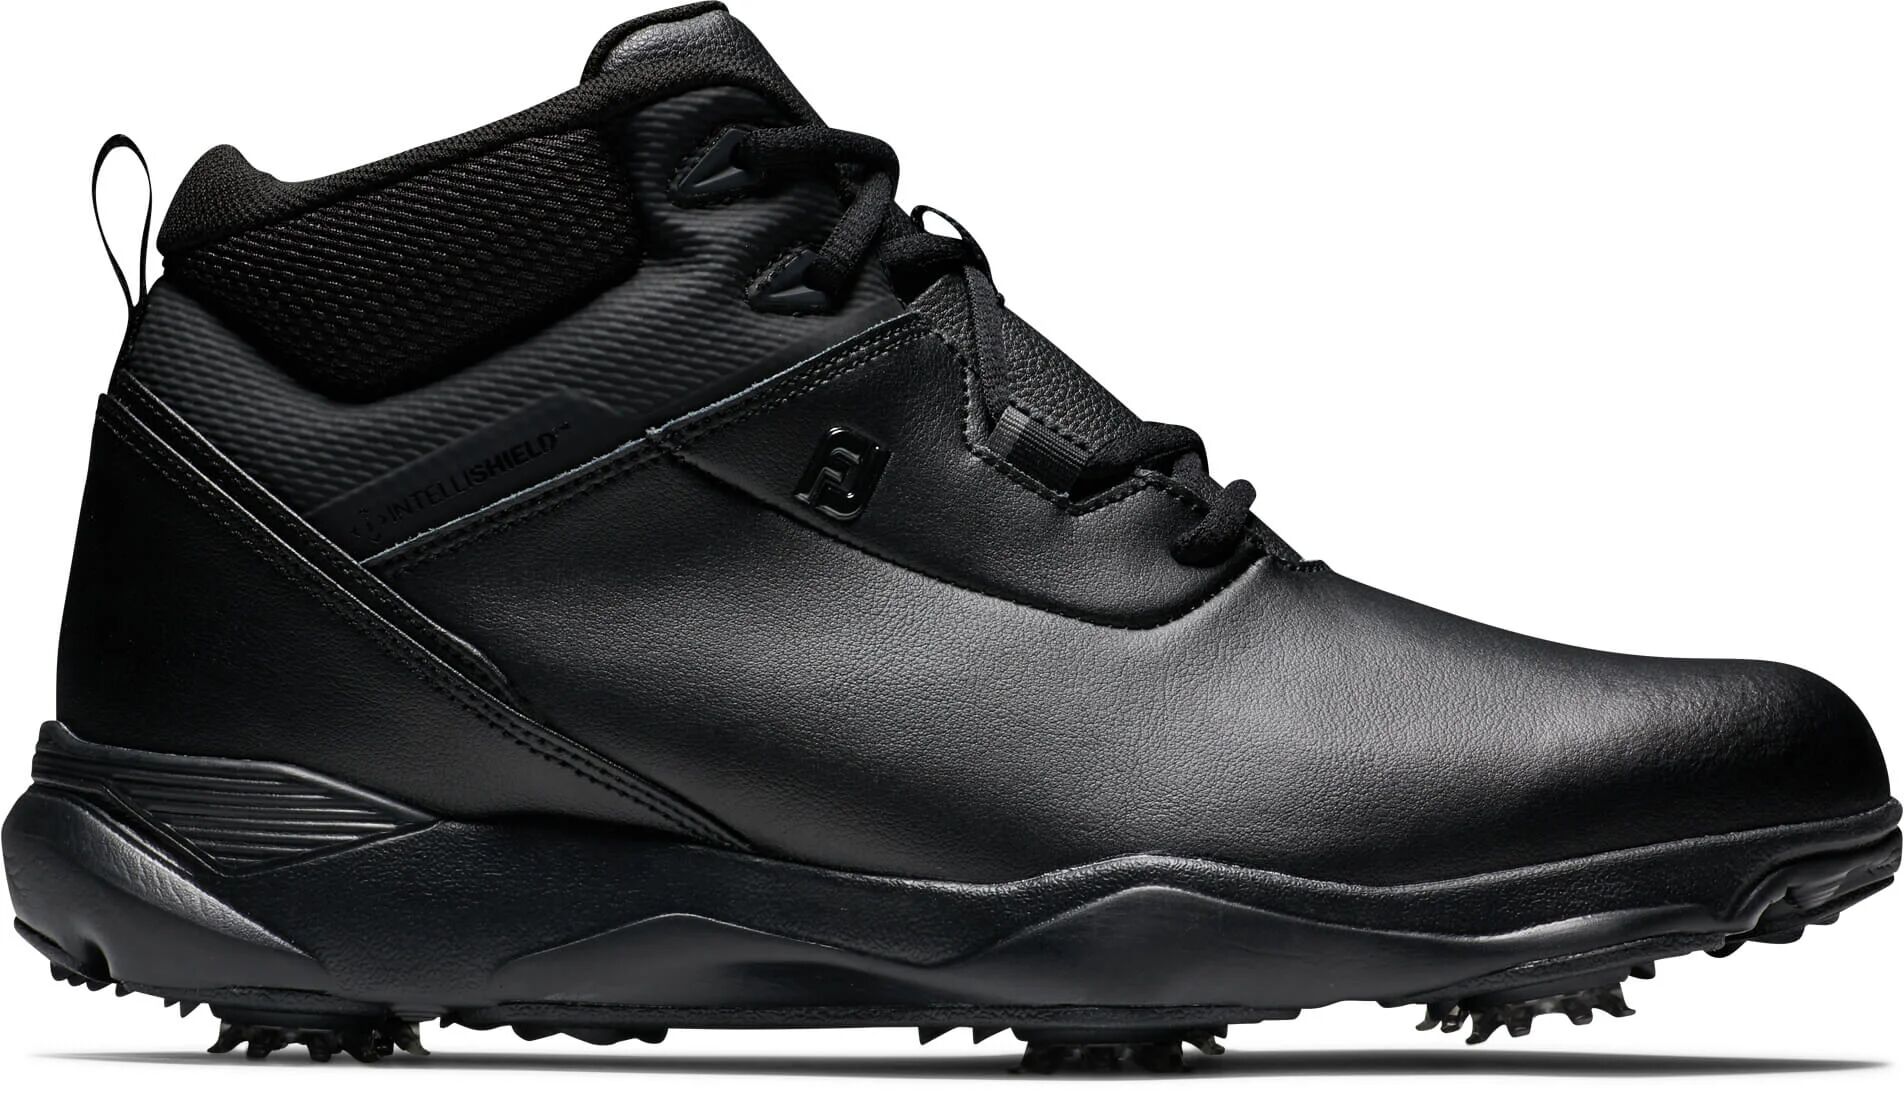 FootJoy Men's Stormwalker Waterproof Golf Rain Boots in Black, Size 10.5, Medium